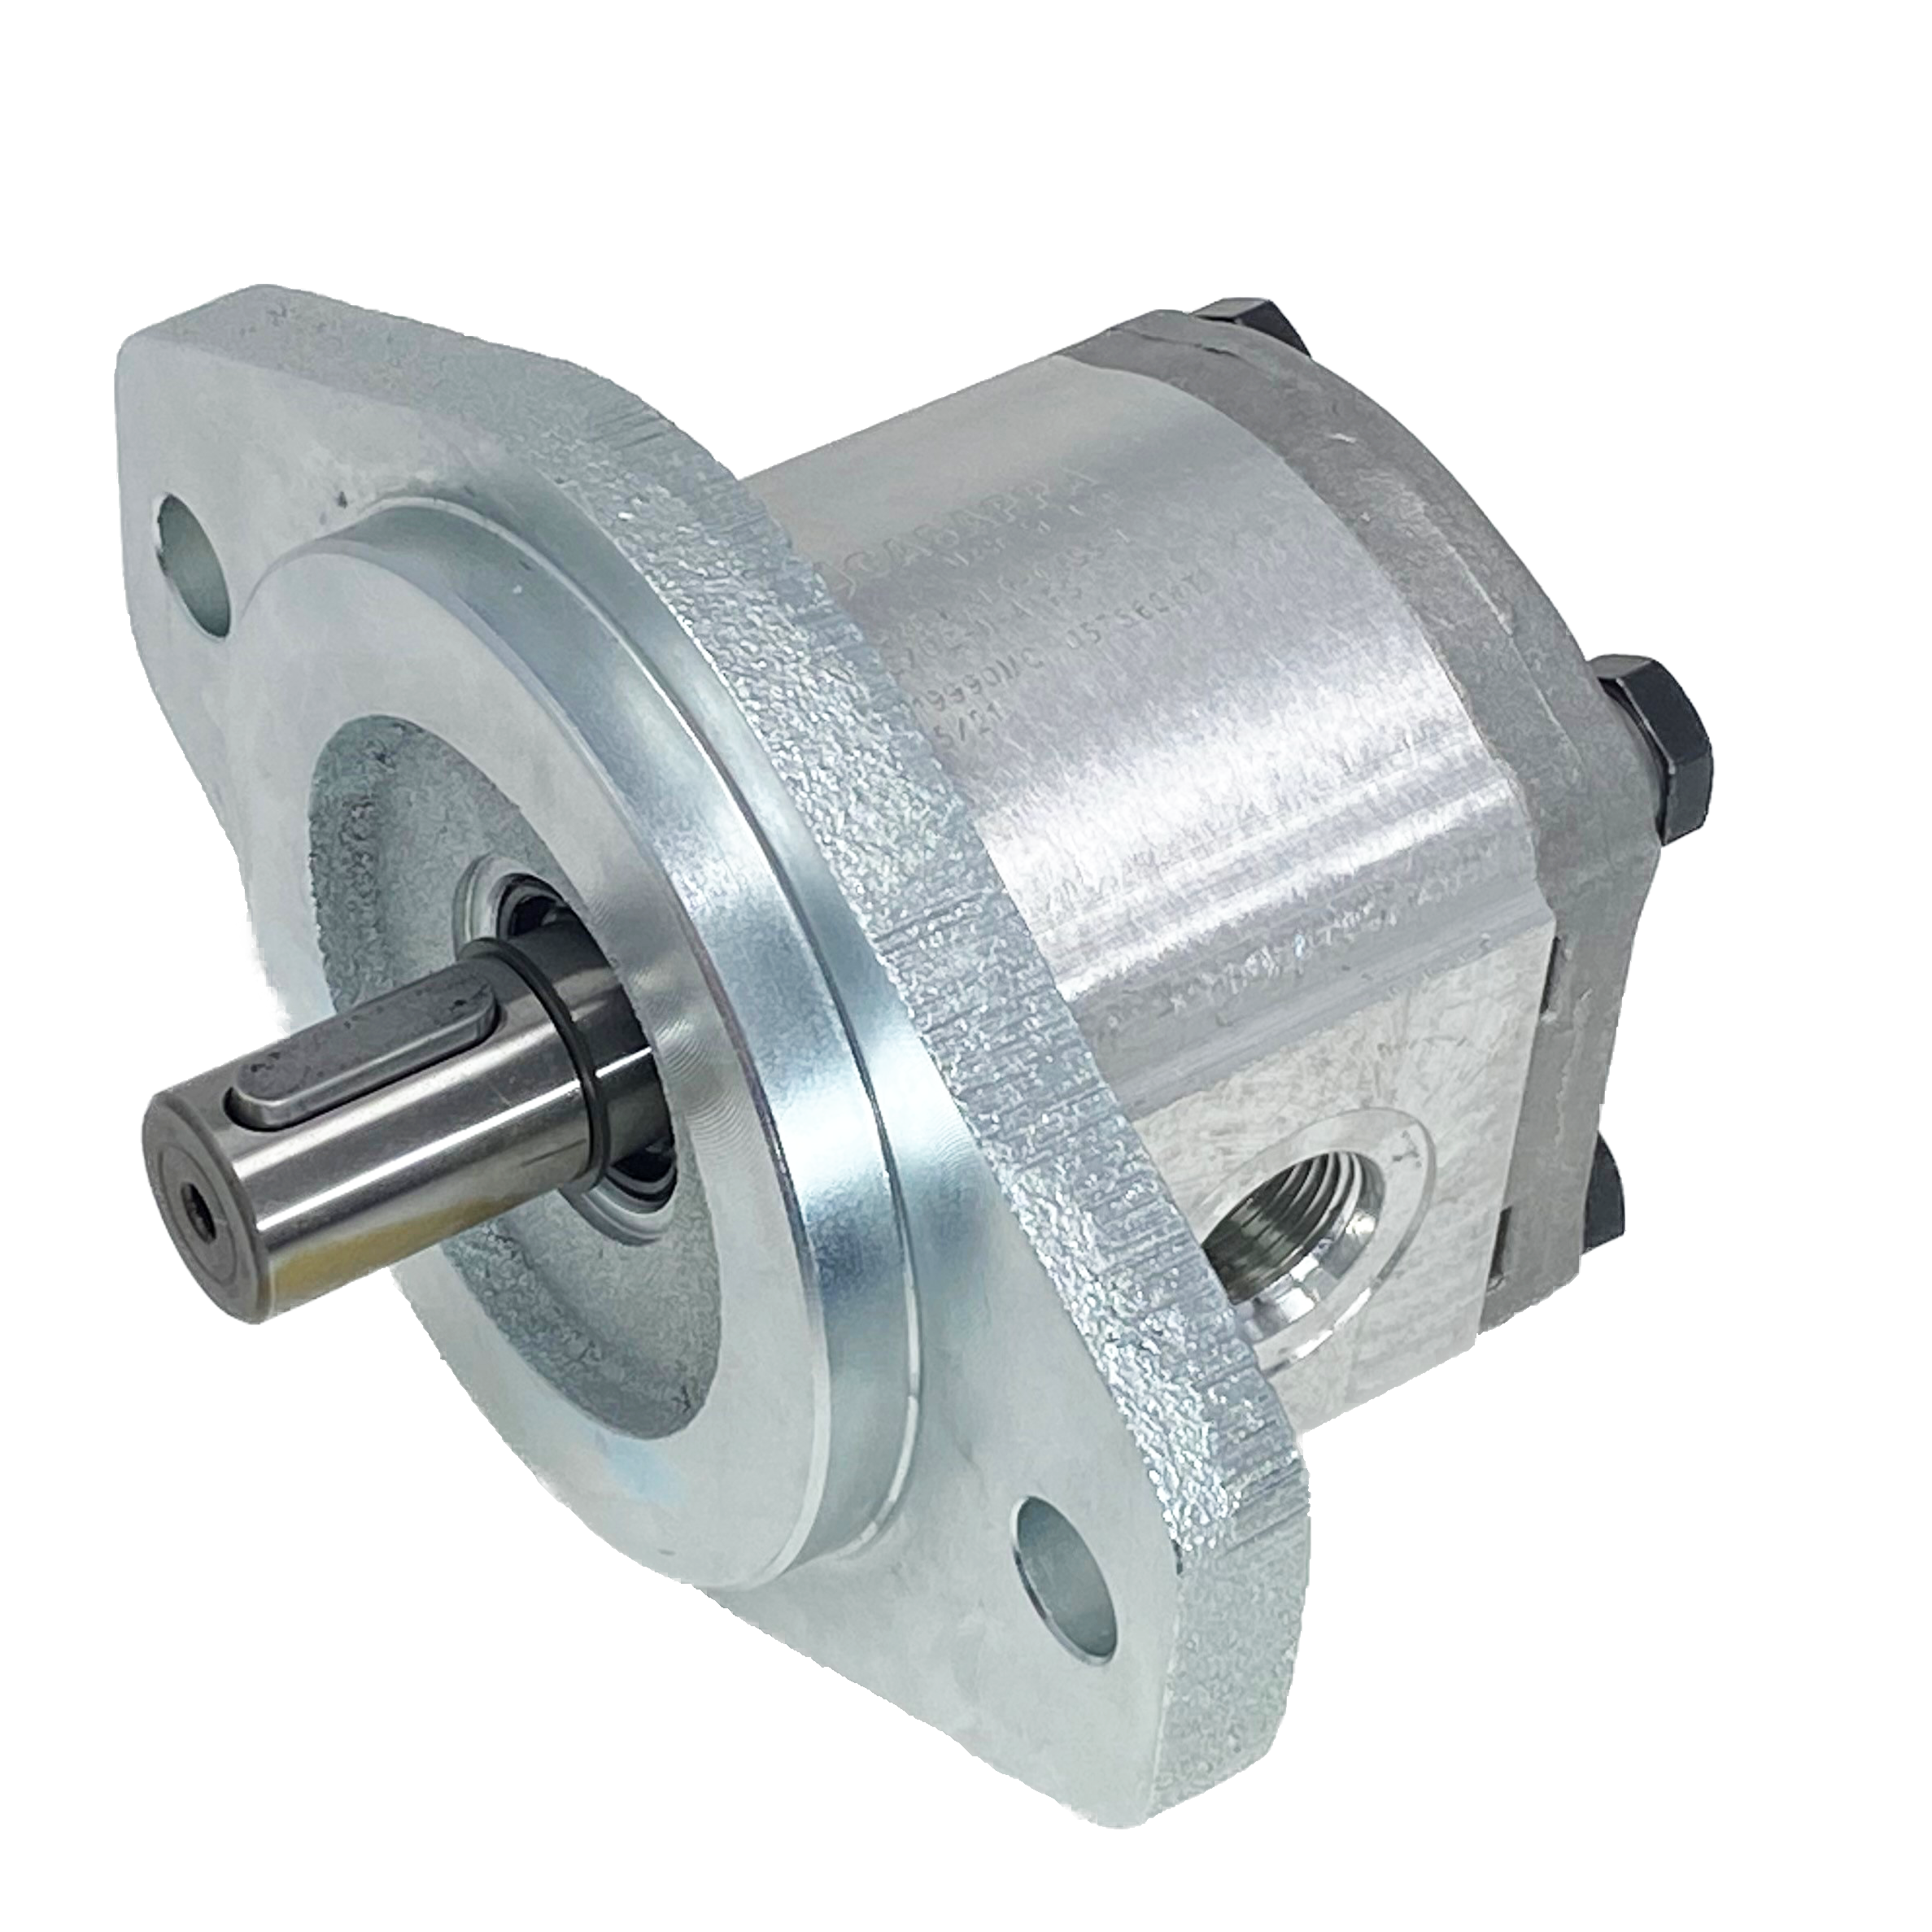 PLM20.8R0-32S5-LOC/OC-N-L : Casappa Polaris Gear Motor, 8.26cc, 3625psi, 3500RPM, Reversible, External Drain, 3/4" Bore x 1/4" Key Shaft, SAE B 2-Bolt Flange, 0.625 (5/8") #10 SAE In, 0.625 (5/8") #10 SAE Out, Aluminum Body, Cast Iron Flange